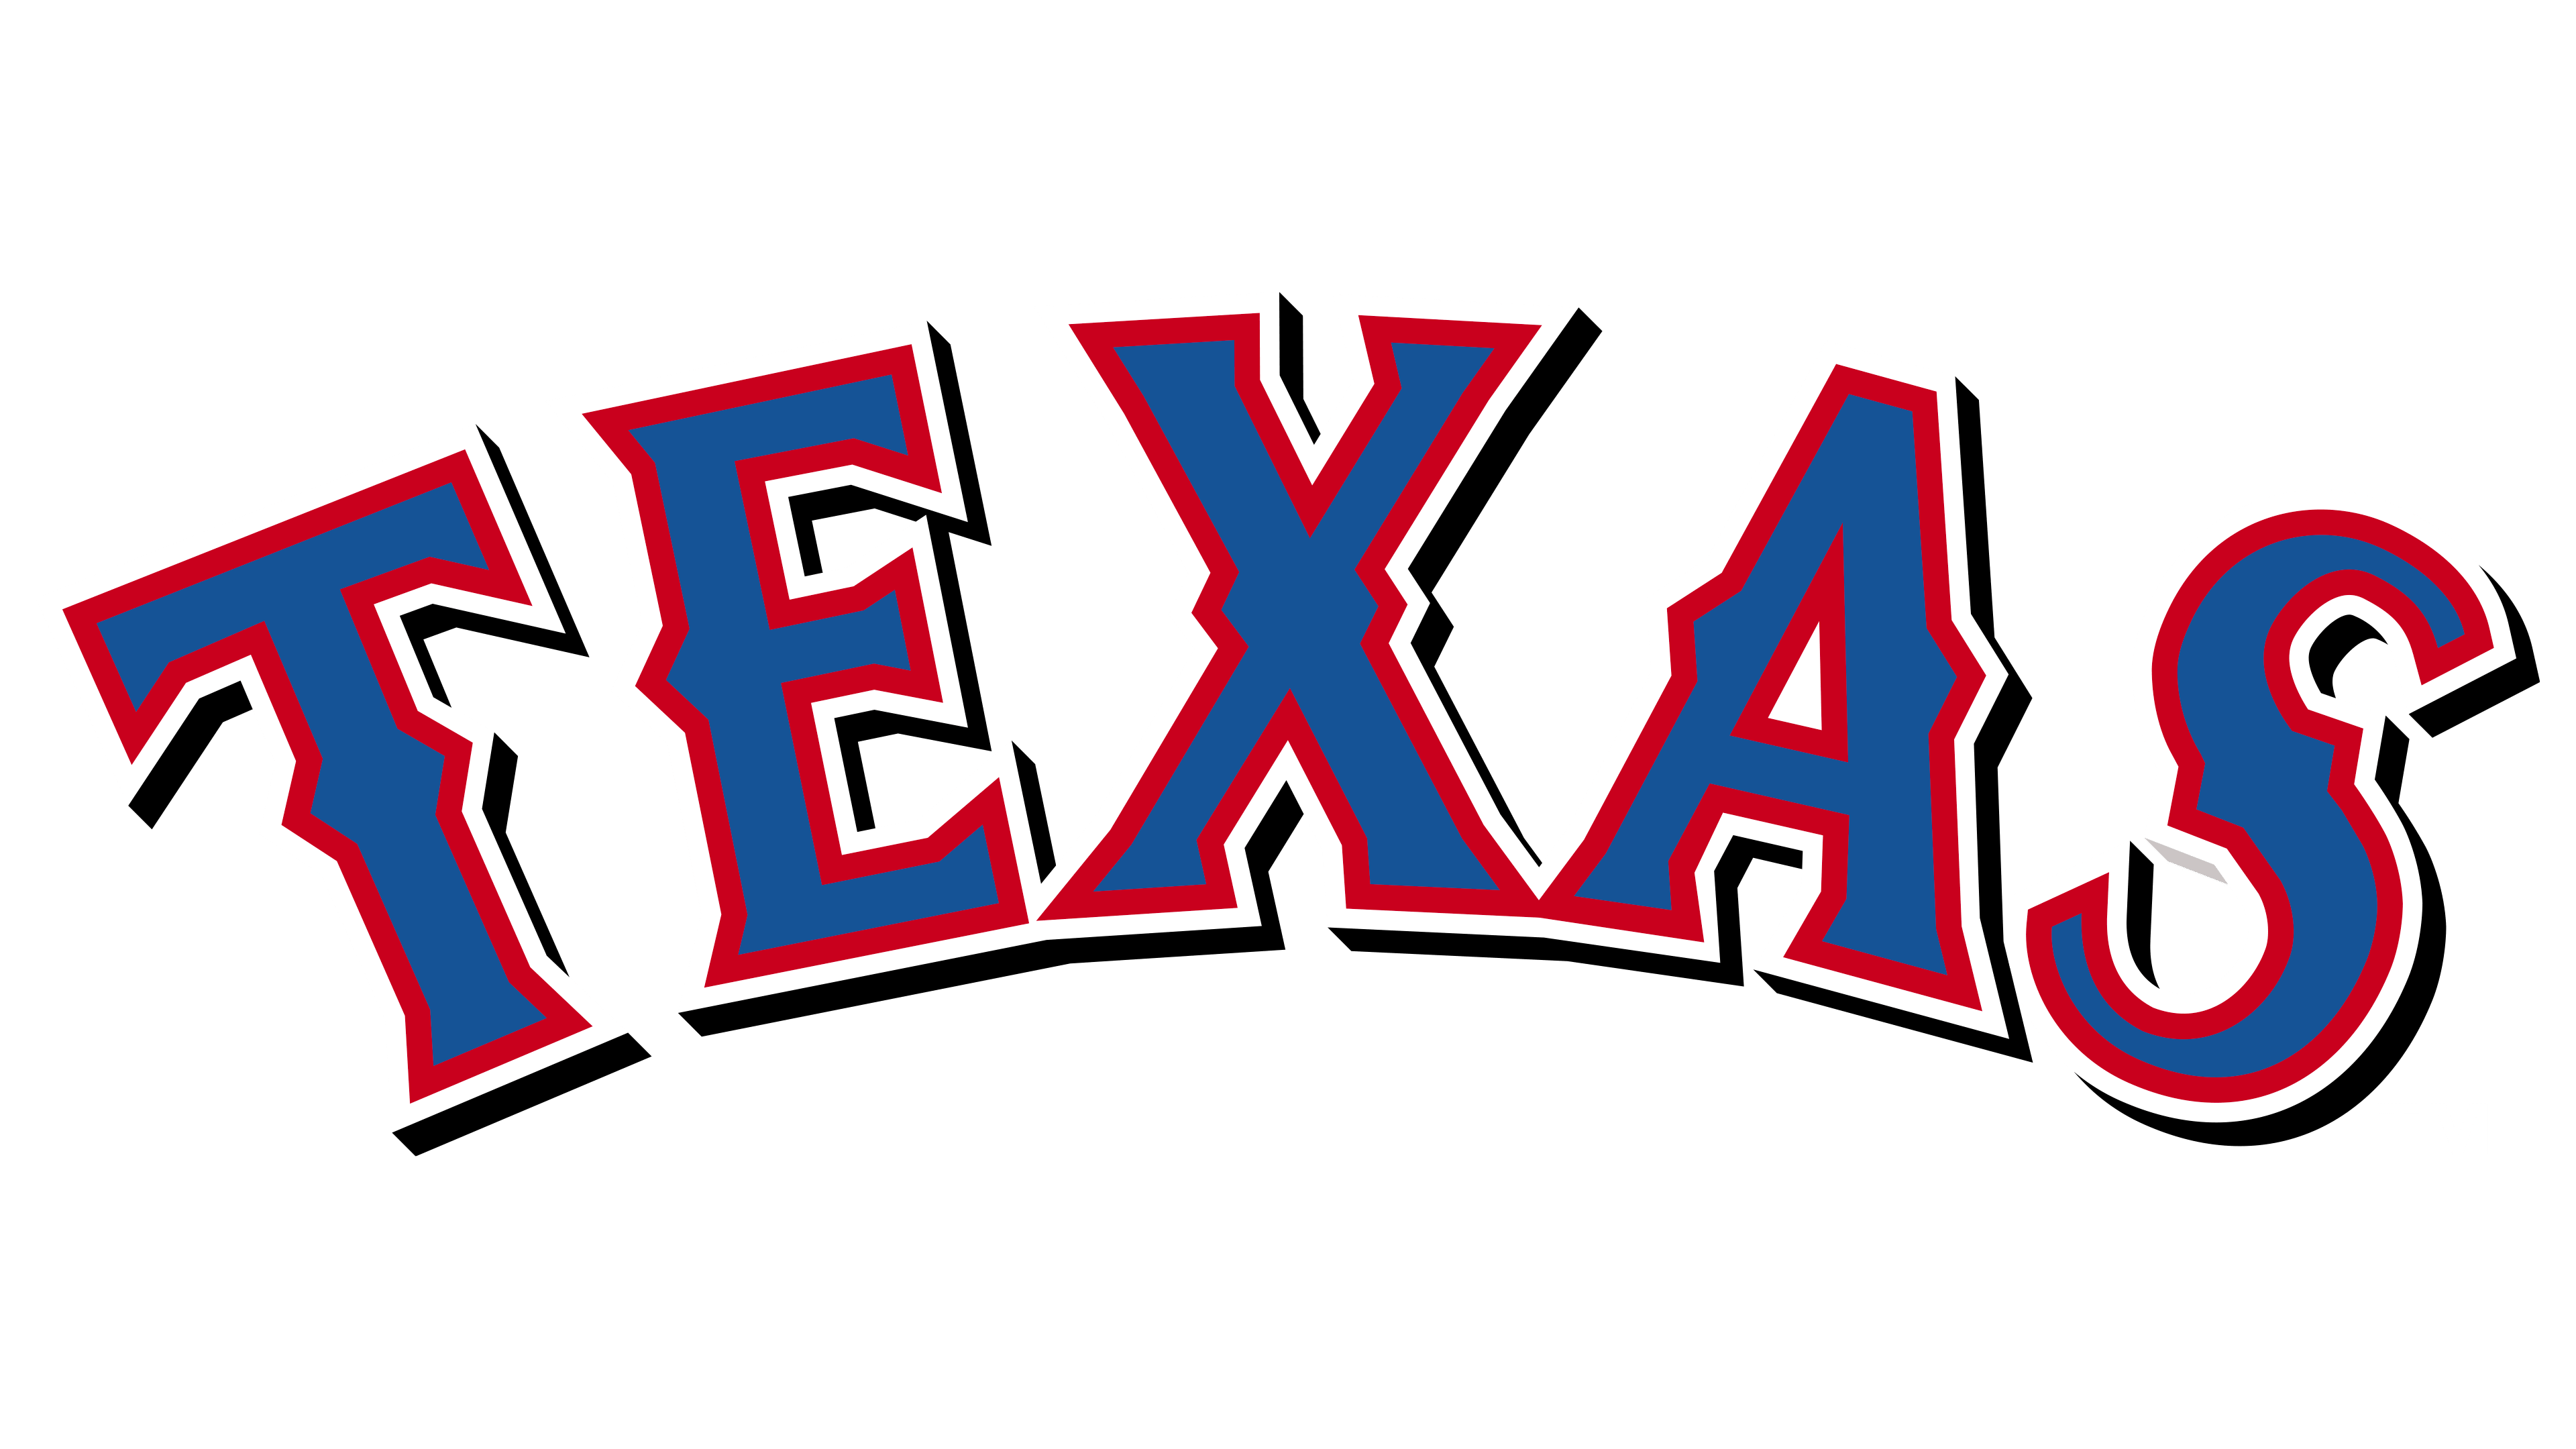 Texas Logo PNG Image | PNG Mart